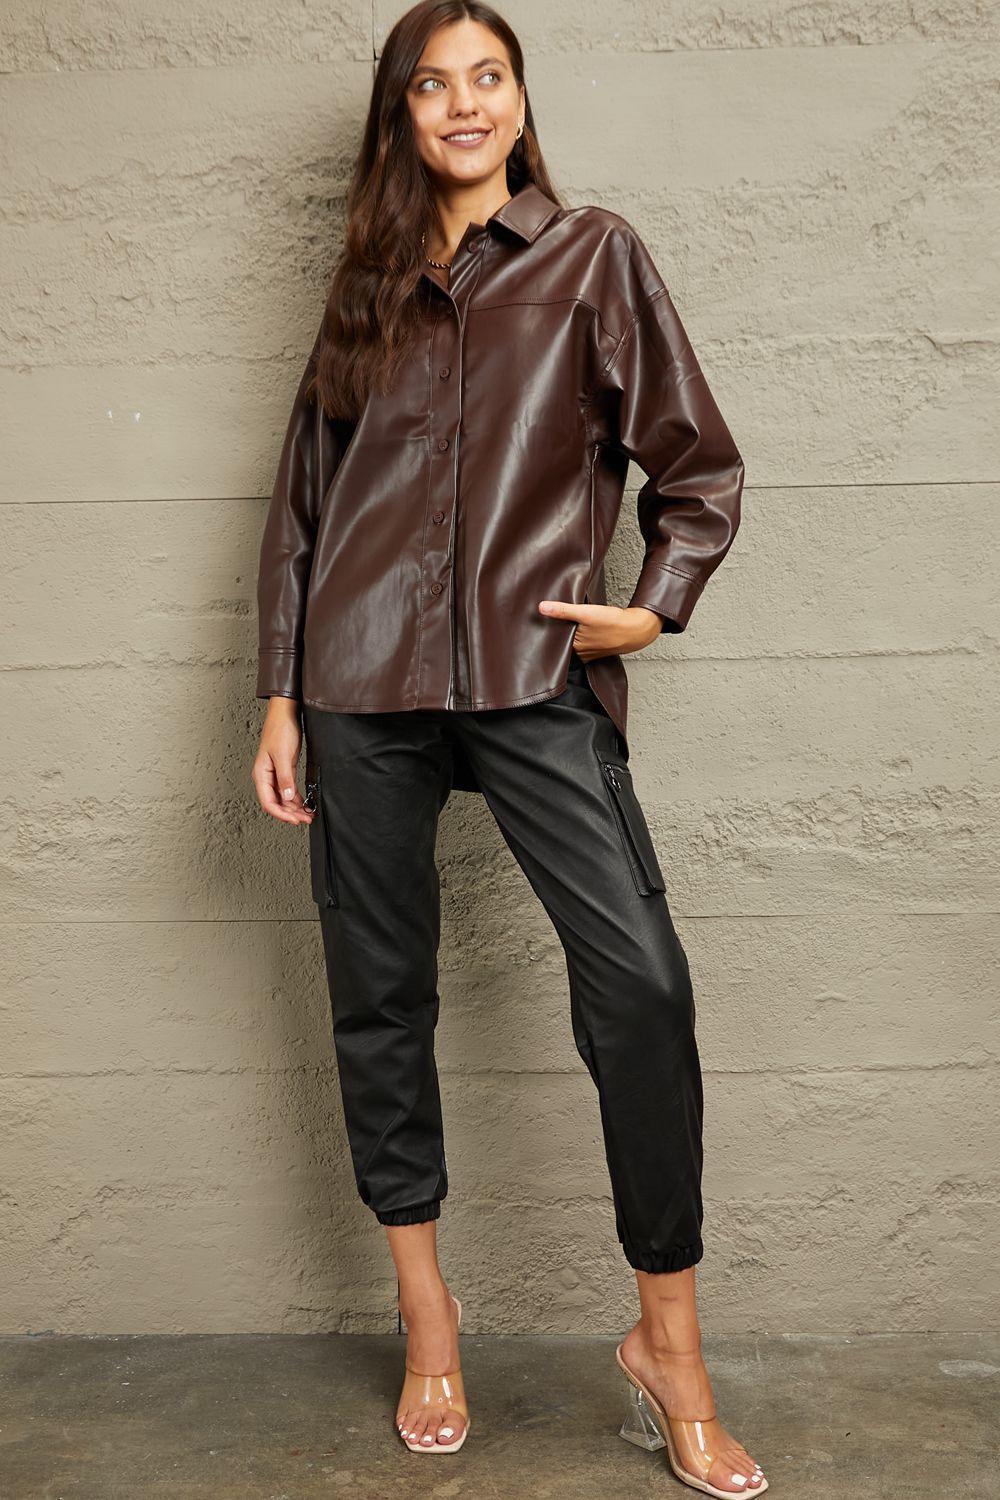 Ethical Fashion Button Down Vegan Leather Jacket - MXSTUDIO.COM